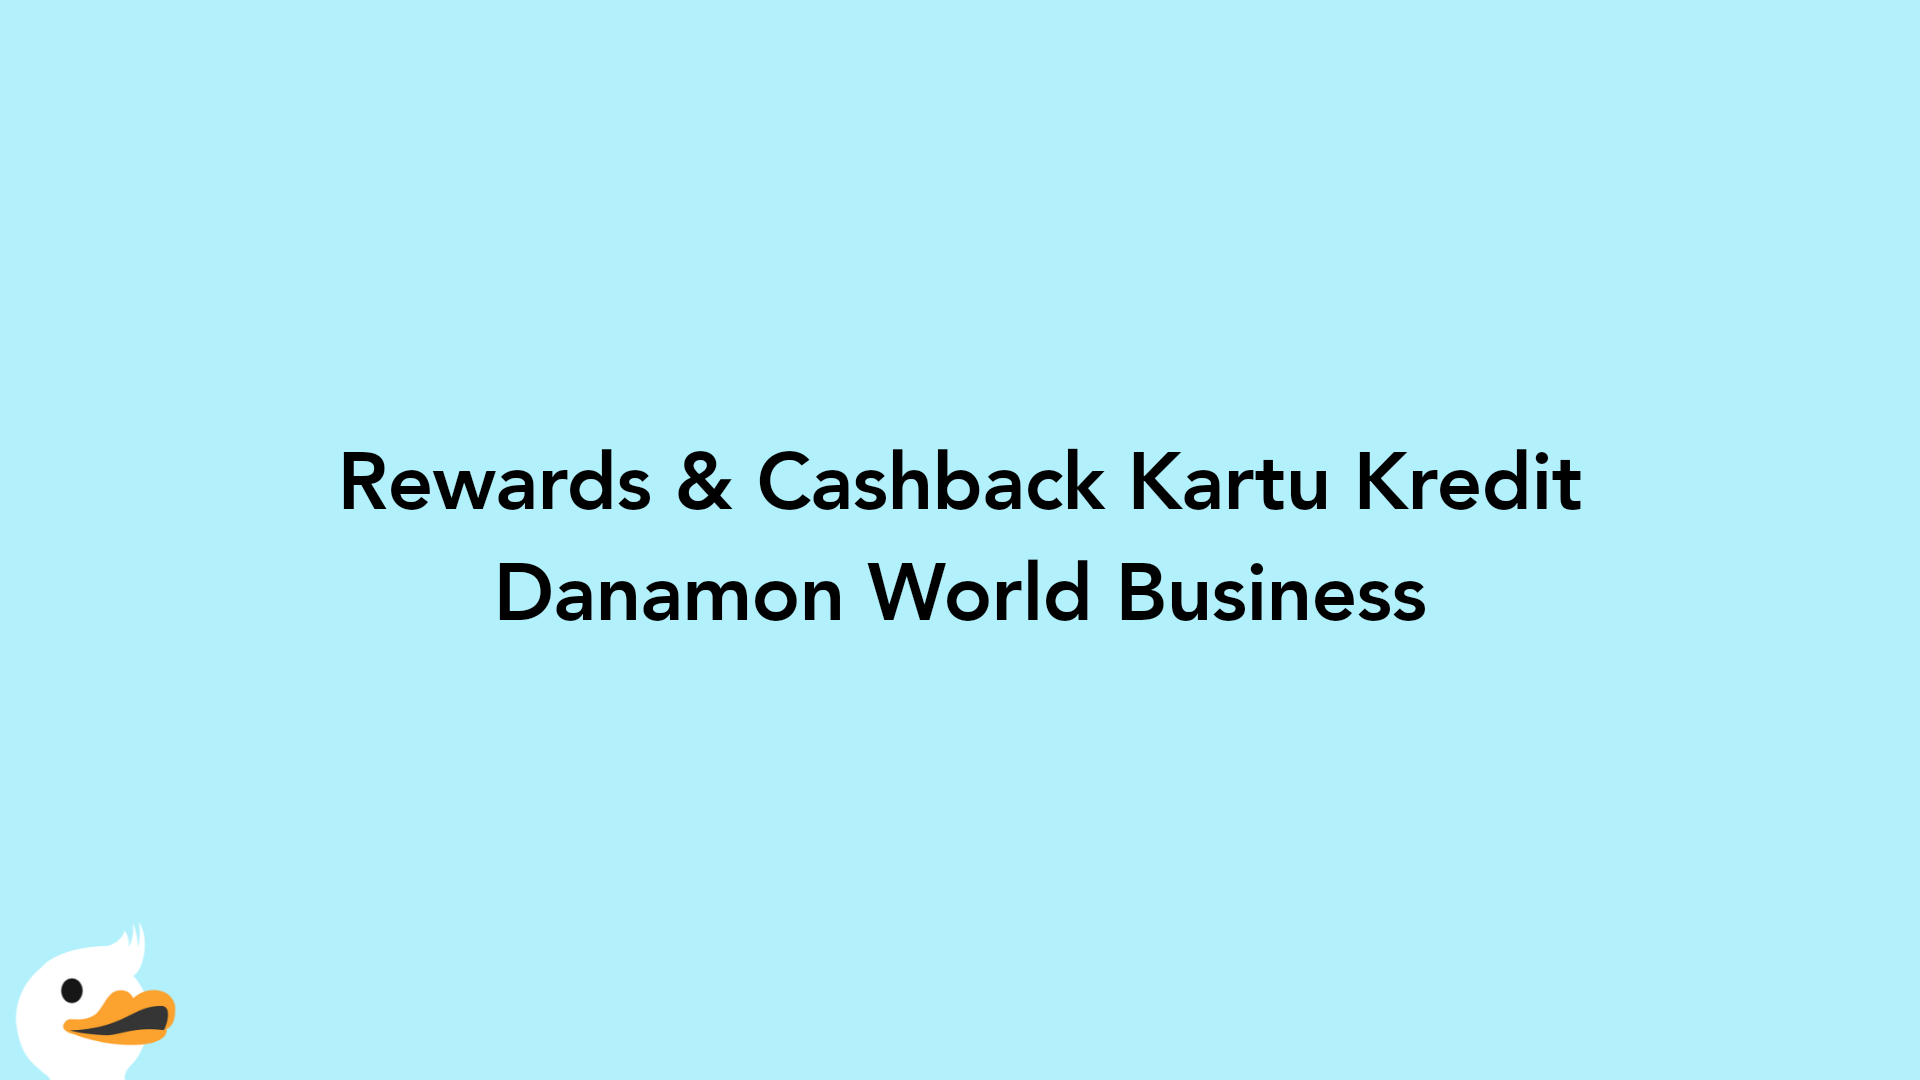 Rewards & Cashback Kartu Kredit Danamon World Business